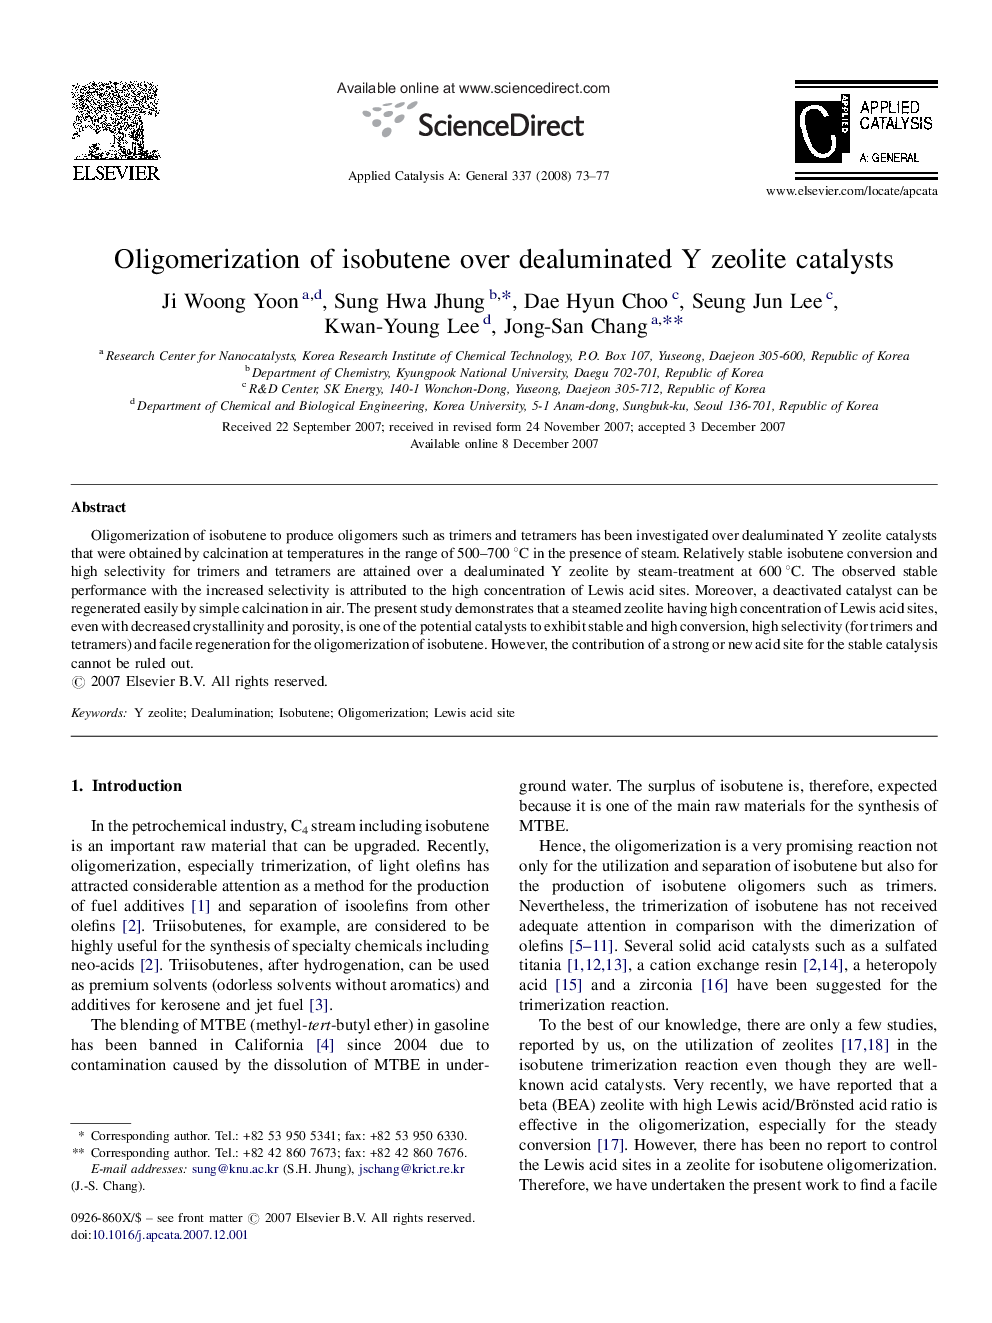 Oligomerization of isobutene over dealuminated Y zeolite catalysts